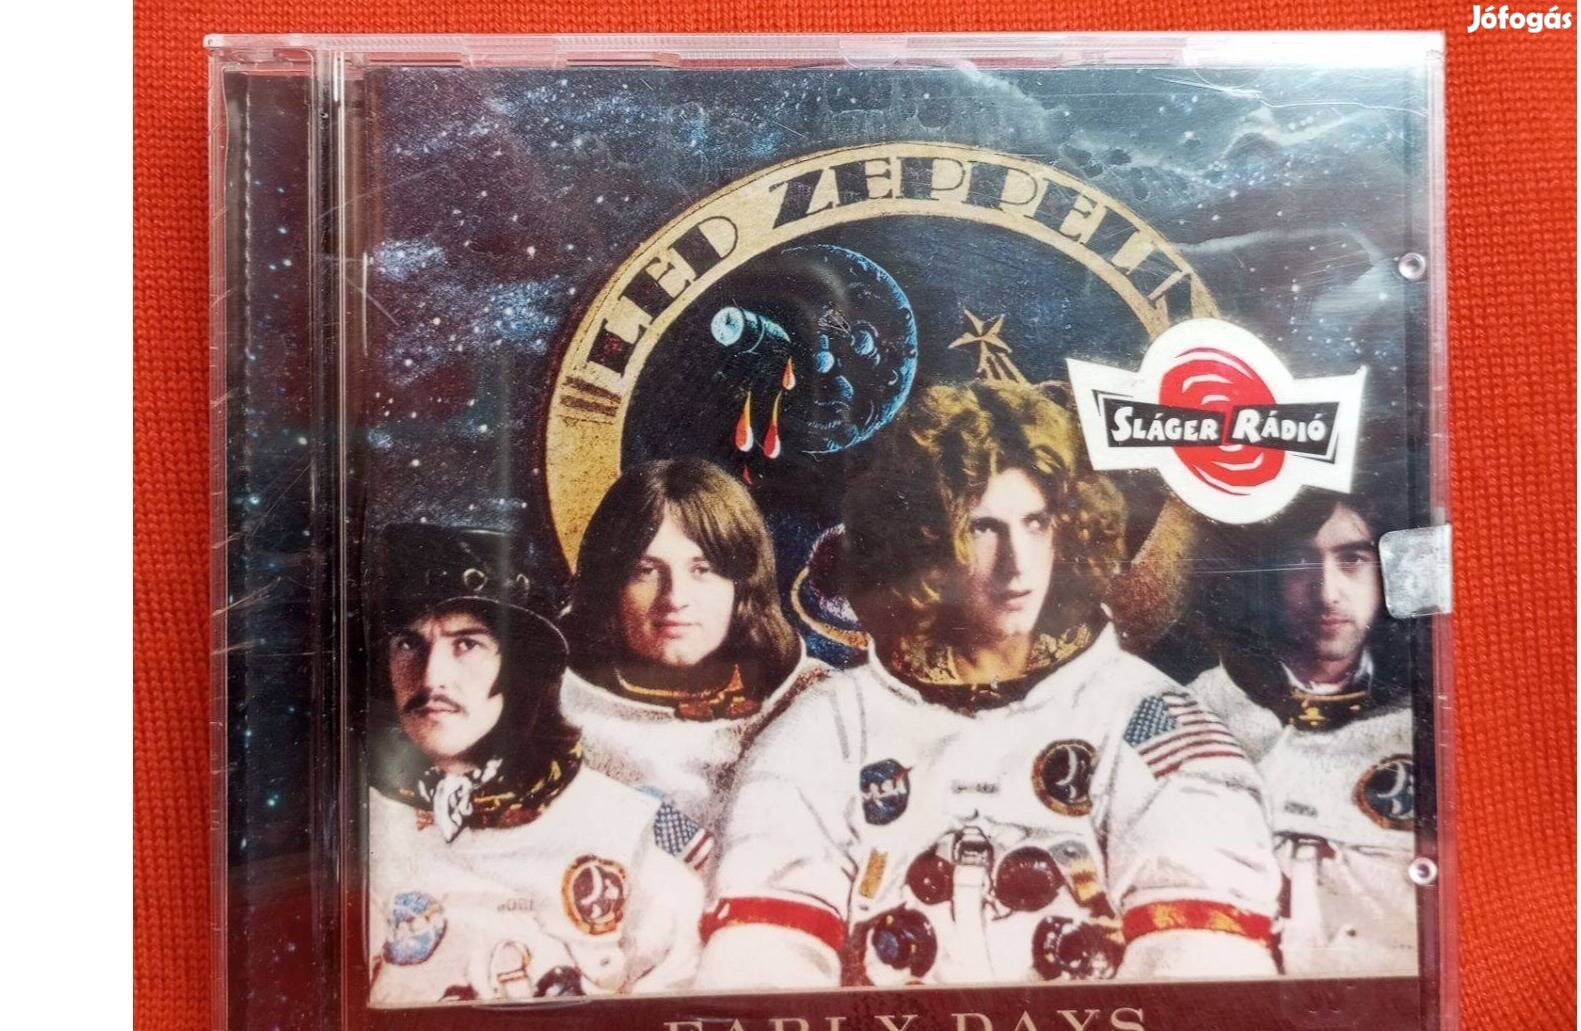 Led Zeppelin - Early Days CD. /új,fóliás/